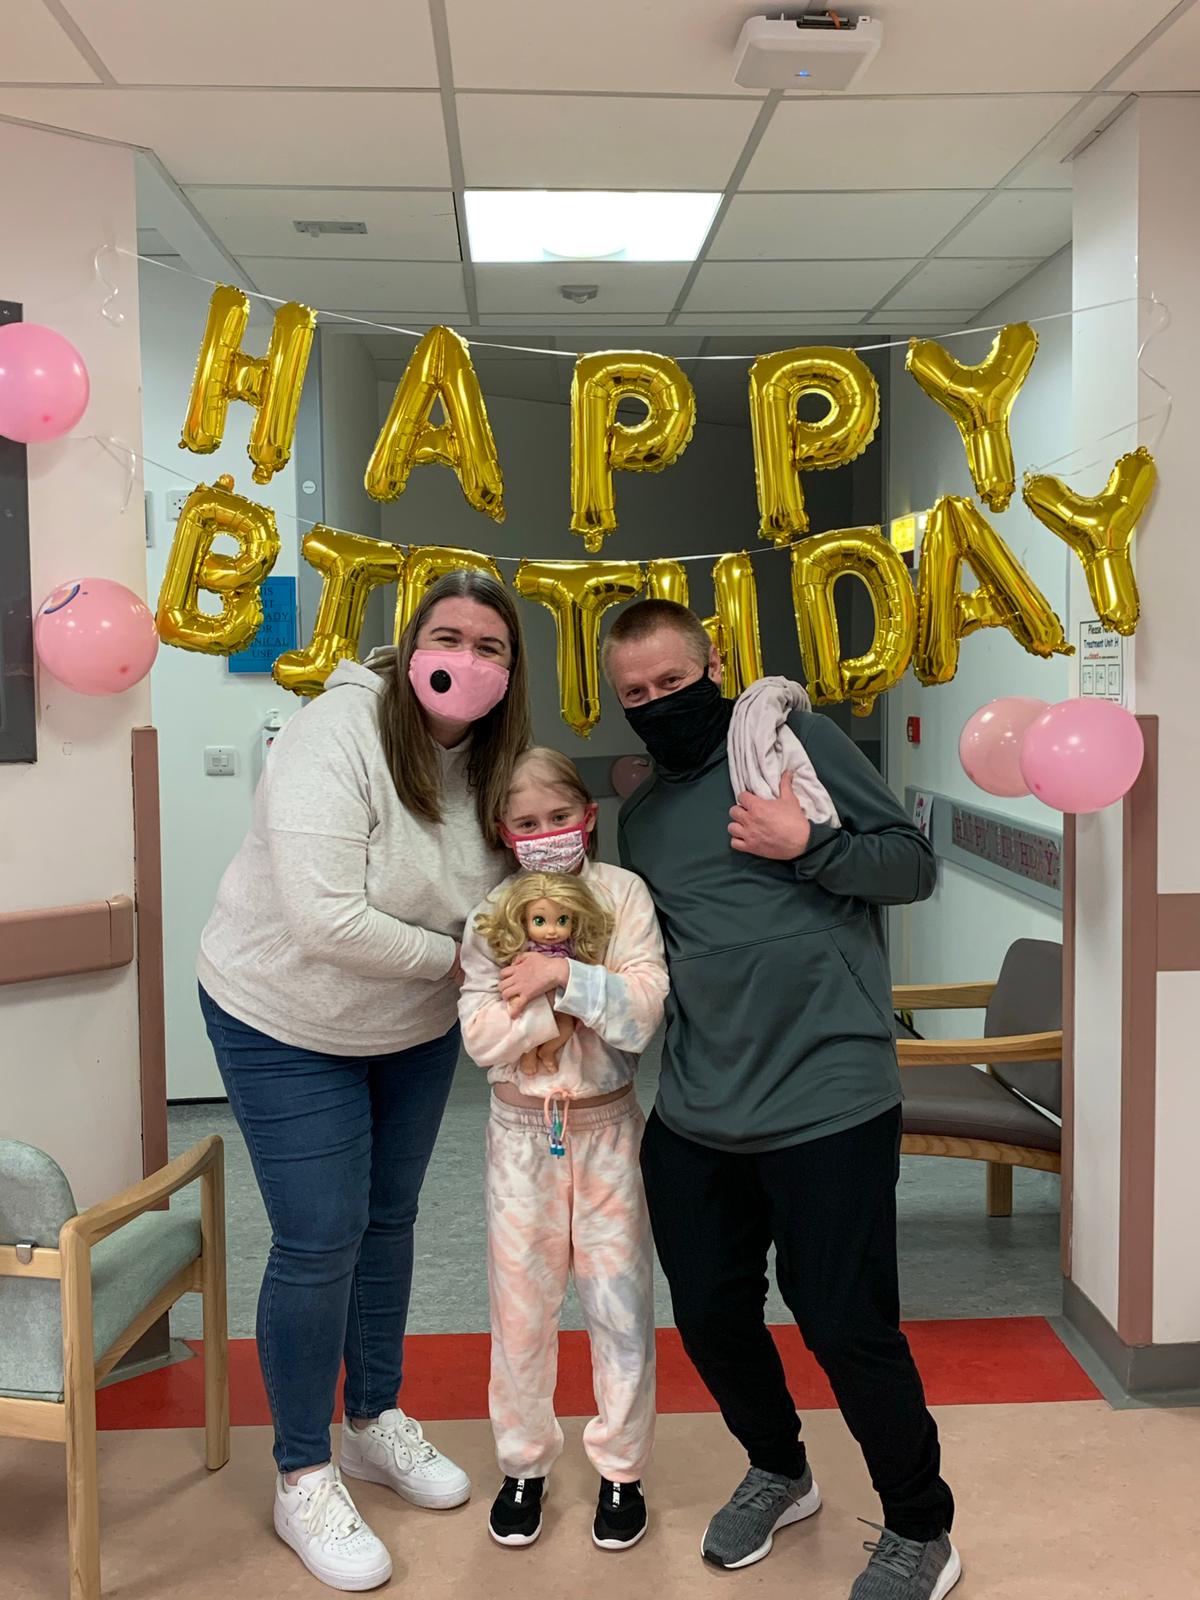 Katie with her parents on her birthday.